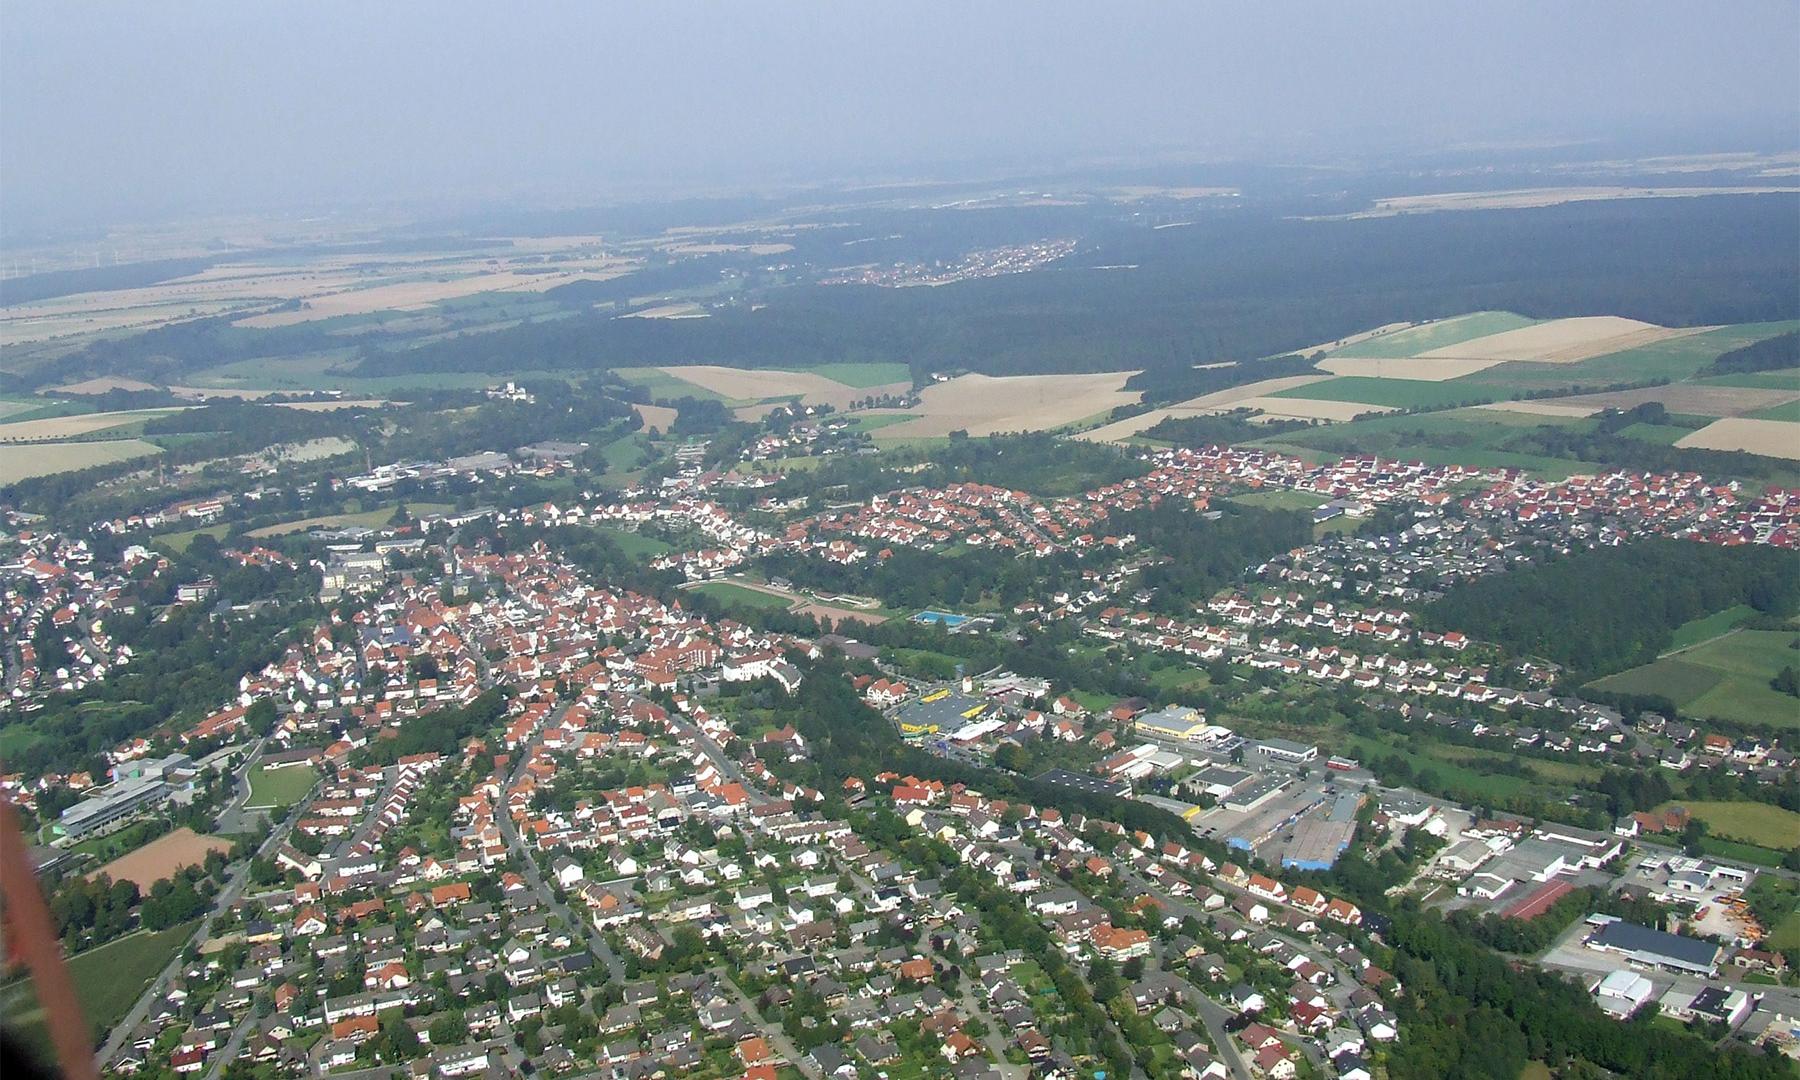 RE/MAX Immobilien Paderborn - Makler für Immobilien in Paderborn